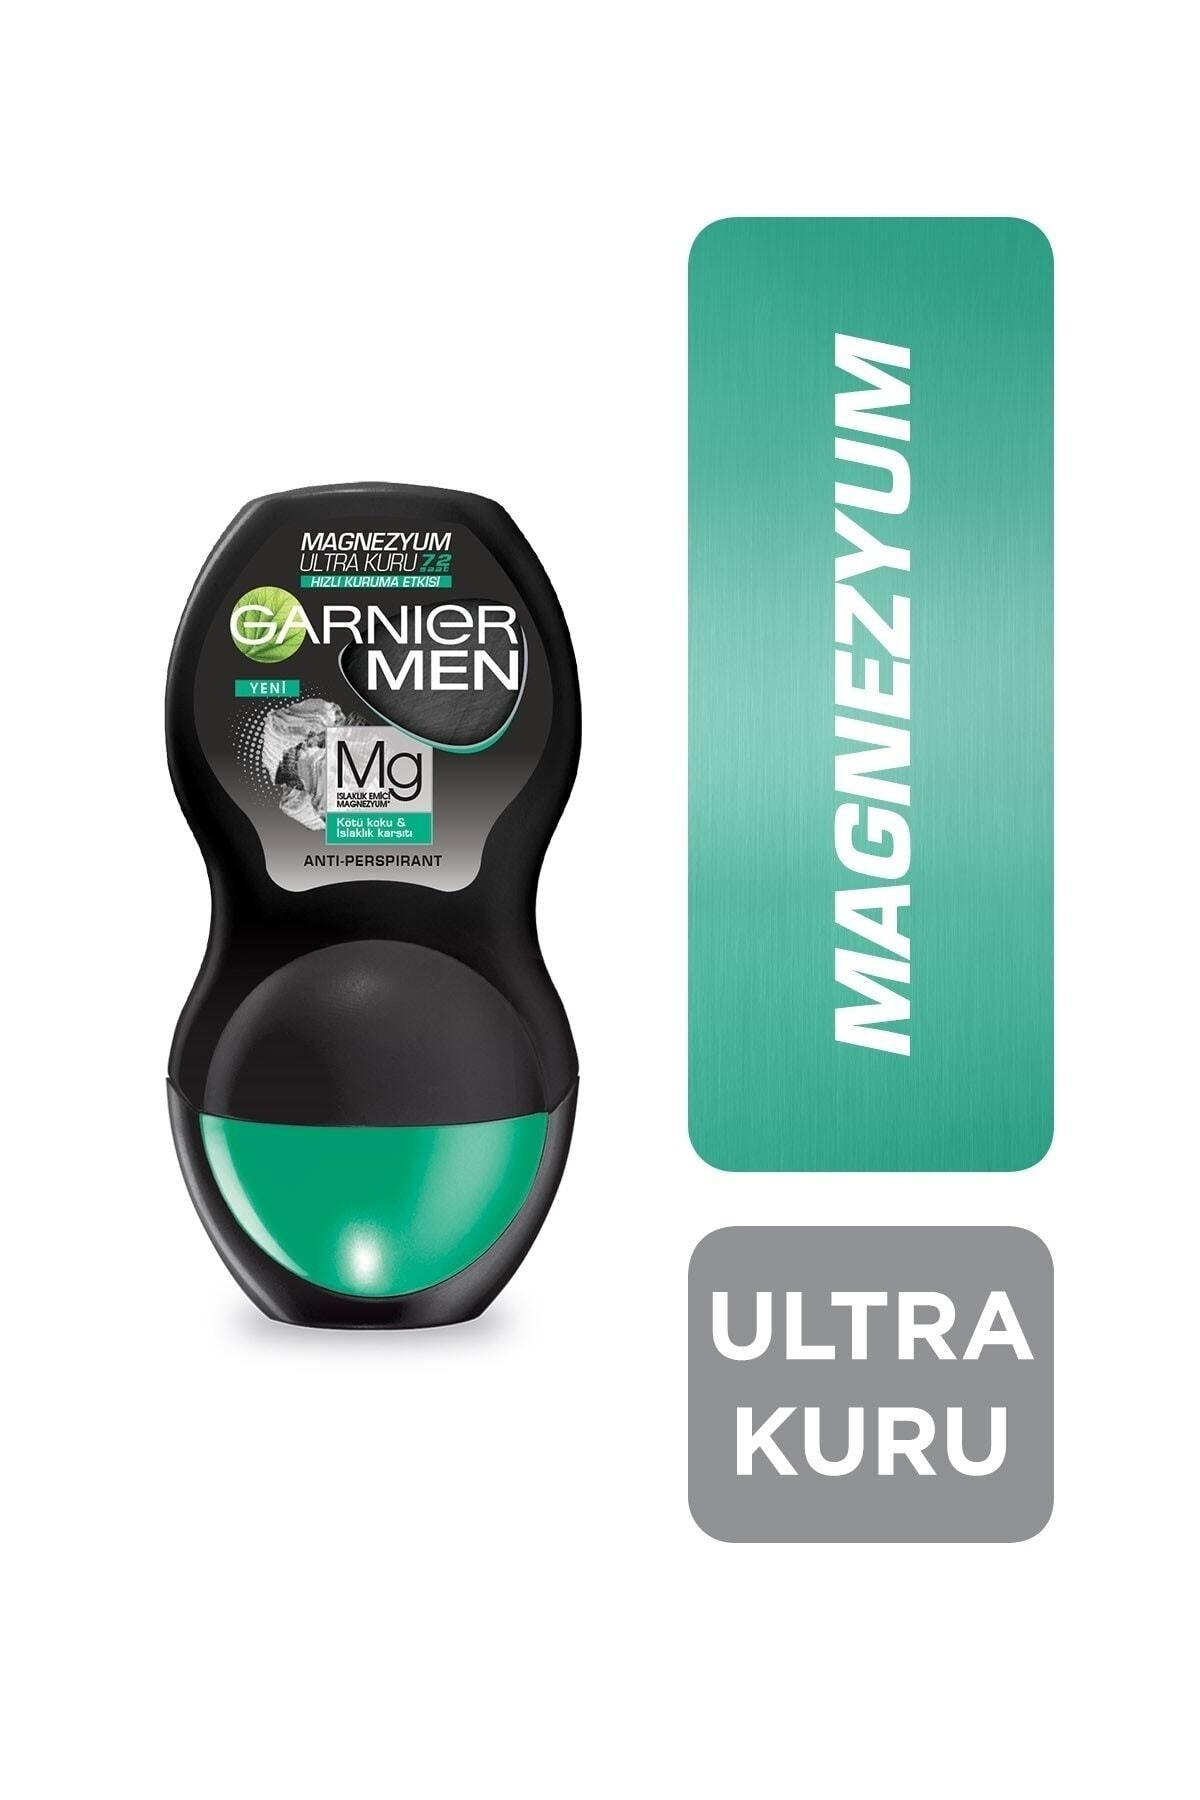 Garnier Marka: Men Magnezyum Ultra Kuru Roll-on Deodorant Kategori: Parfüm Ve Deodorant